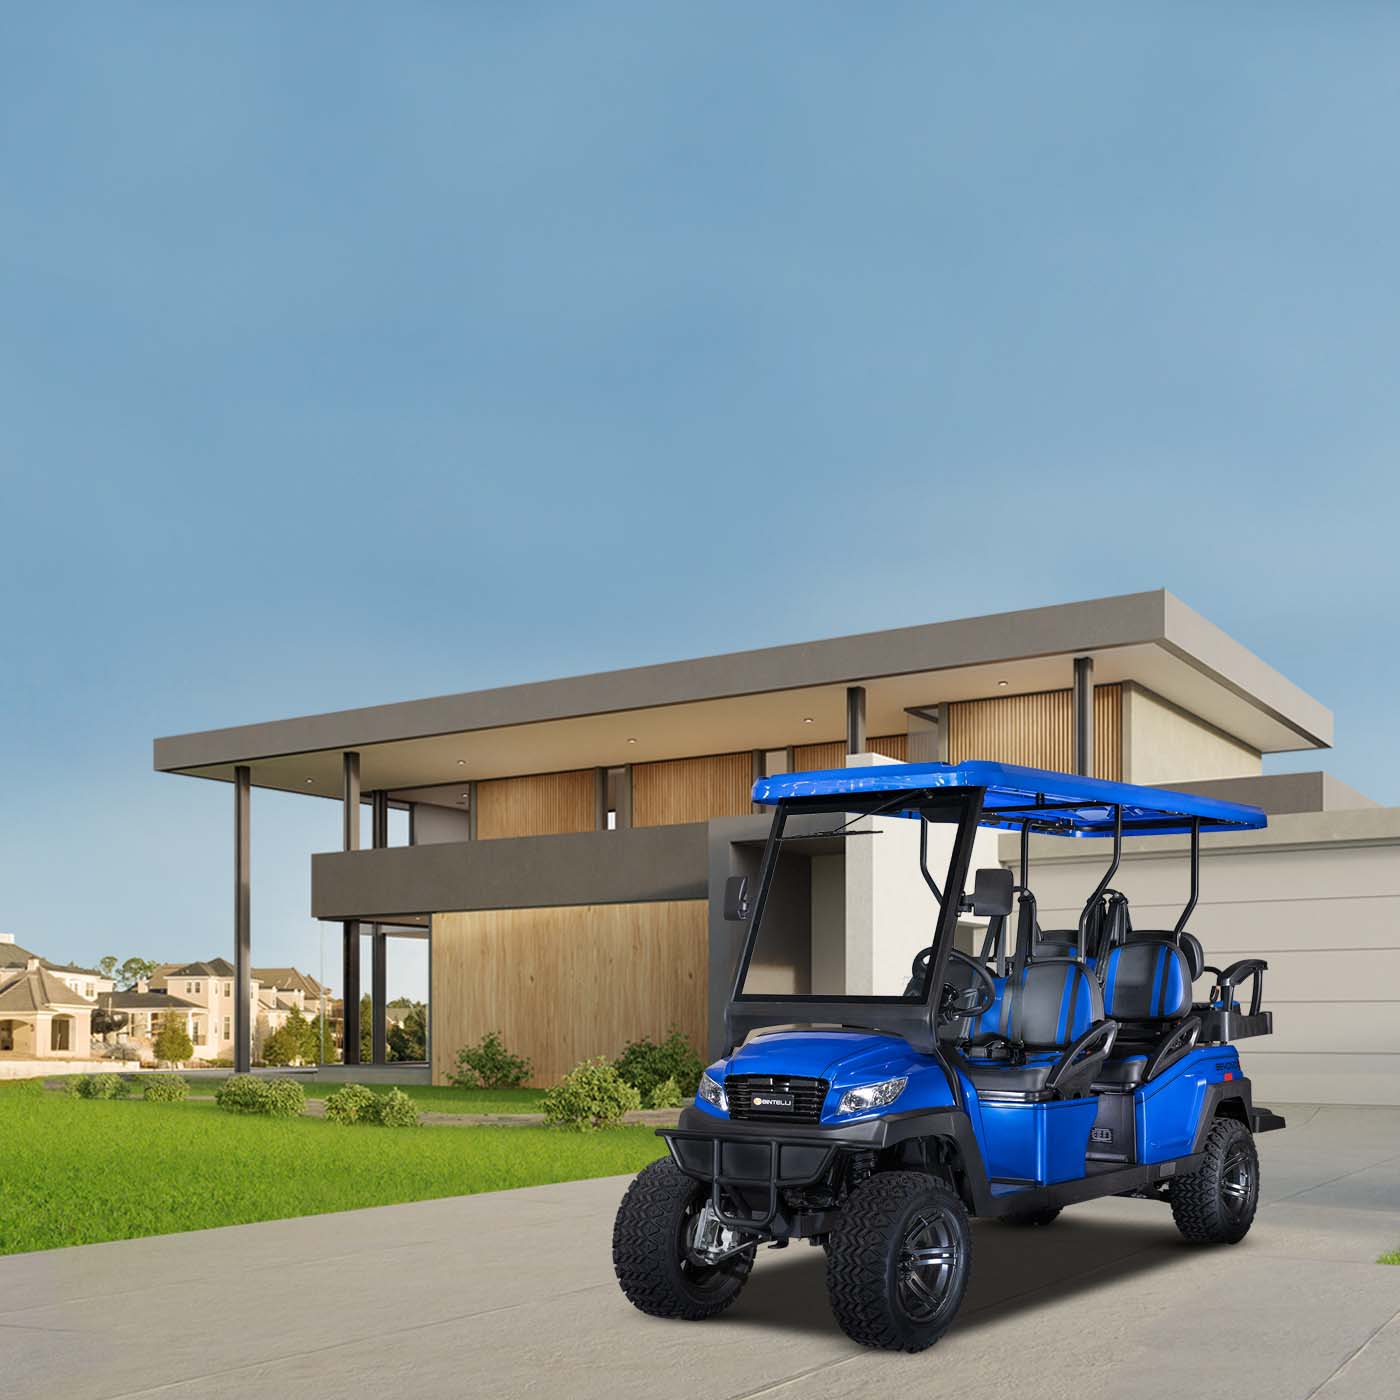 Electric Golf Cart Parts - citEcar, Bintelli, StarEV, & More